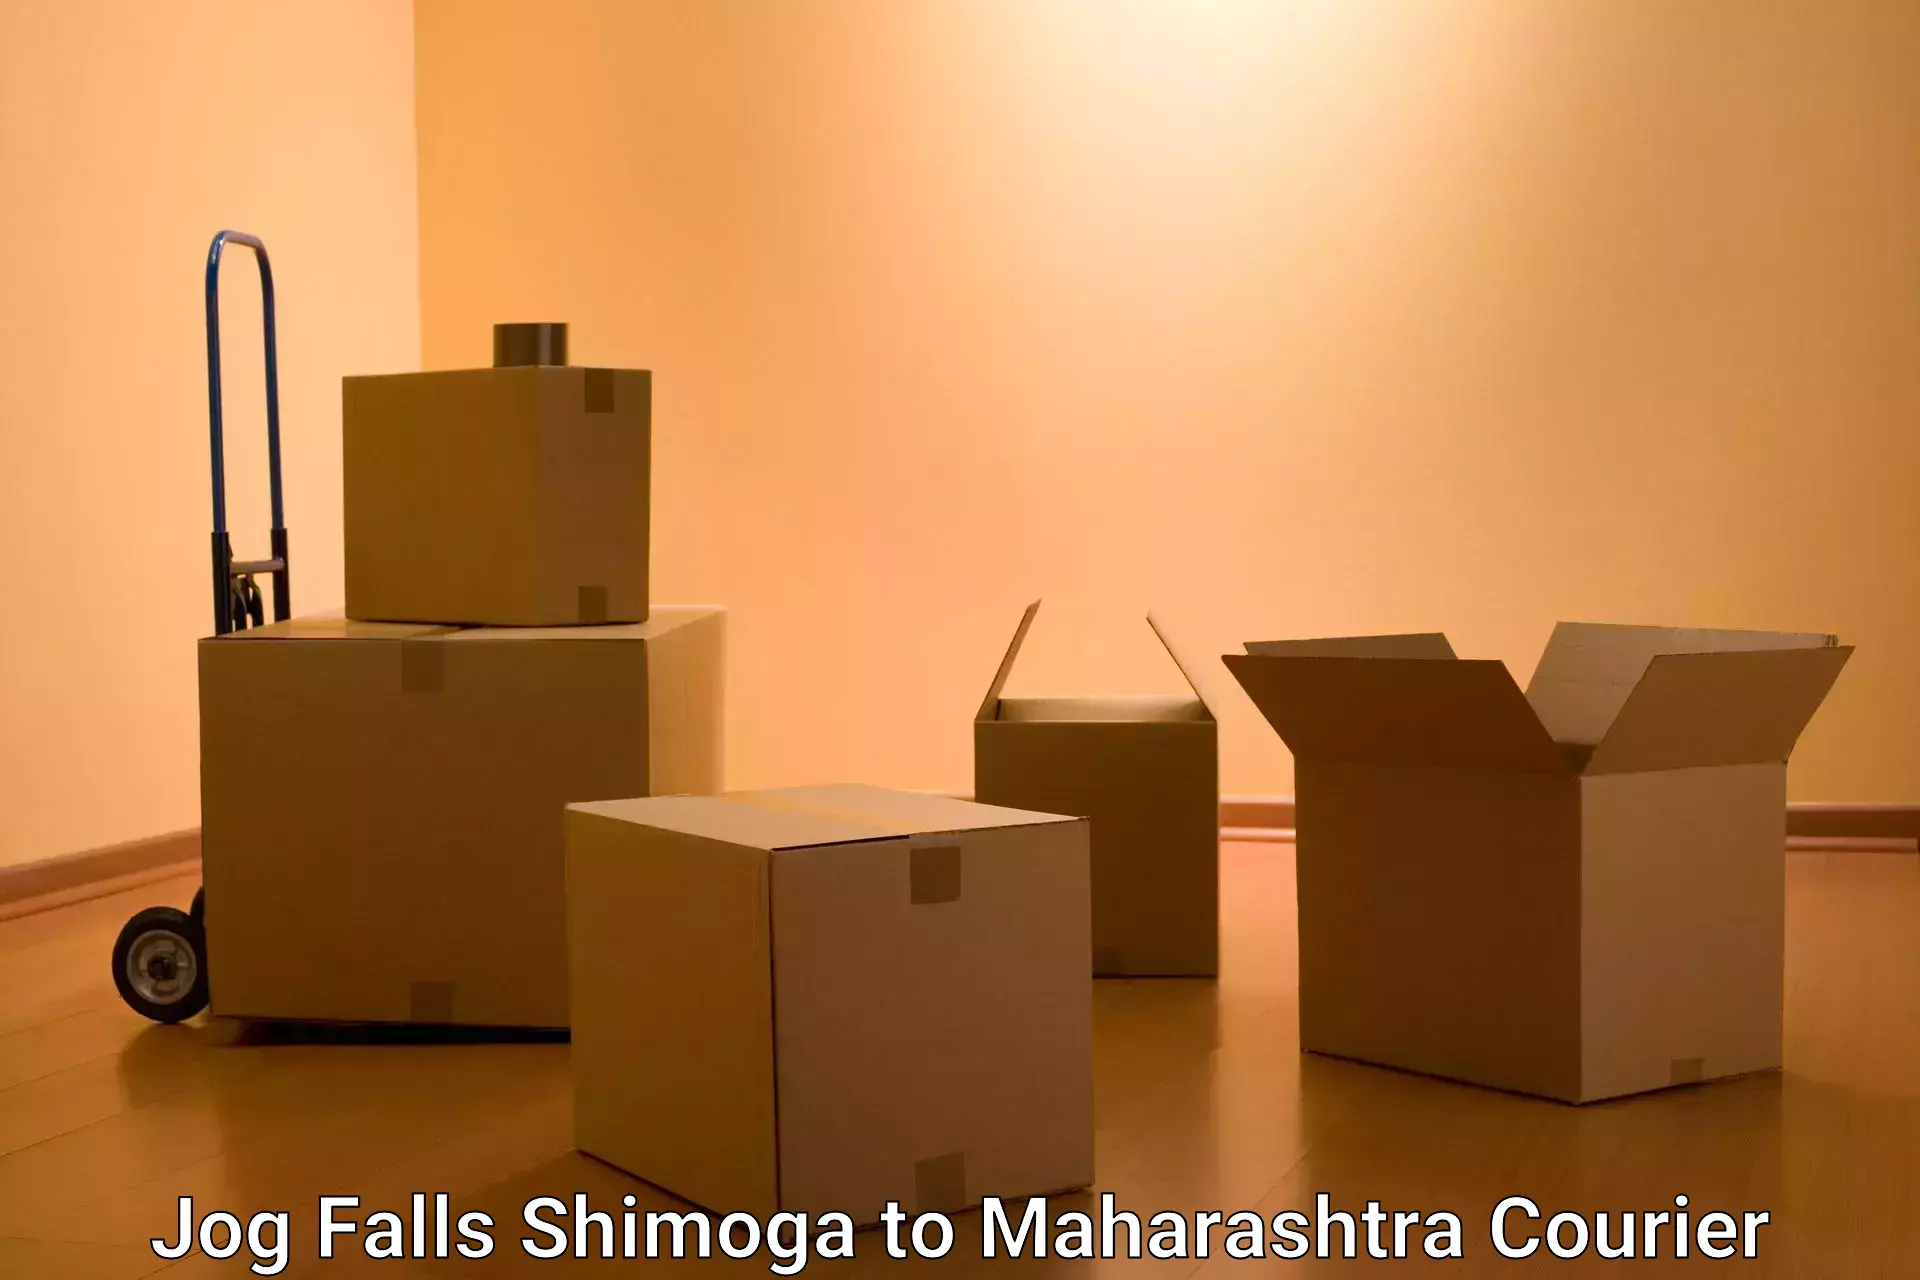 Multi-national courier services Jog Falls Shimoga to Tata Institute of Social Sciences Mumbai